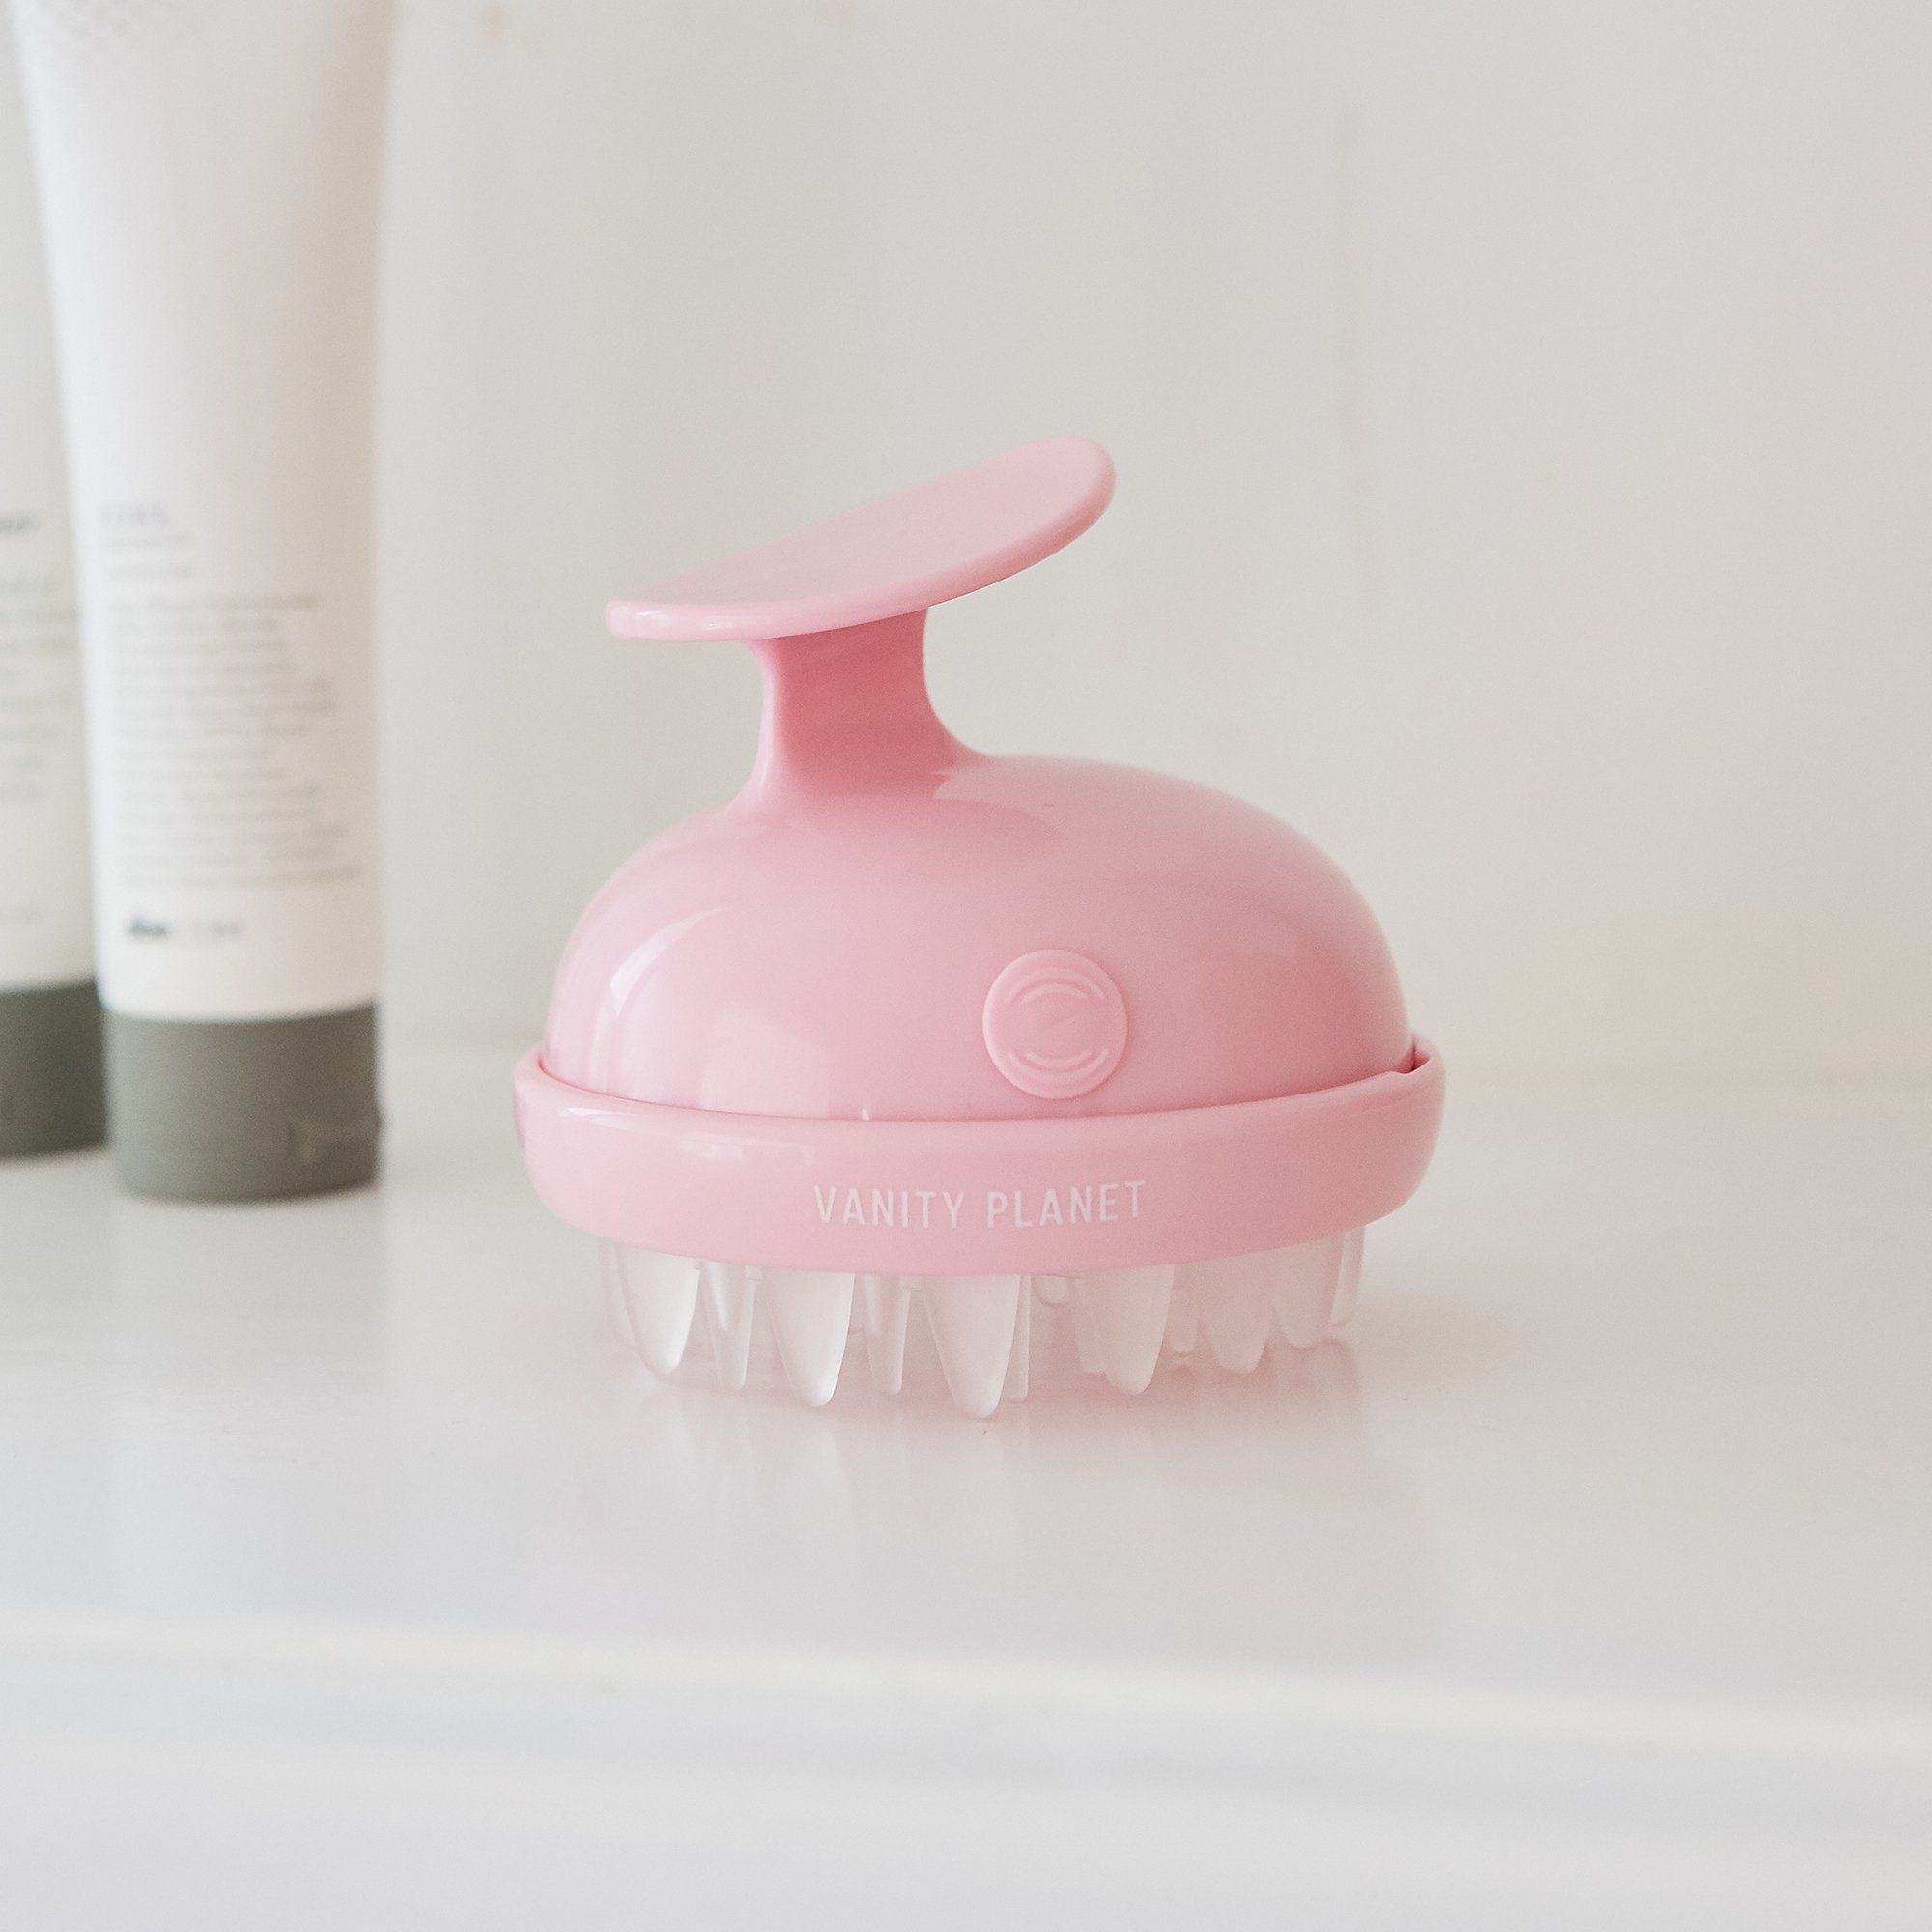 Vanity Planet Groove Scalp Massager (Pucker-up Pink) Rejuvenating Handheld Shampoo Brush, 2-Speed Vibrating, Water Resistant